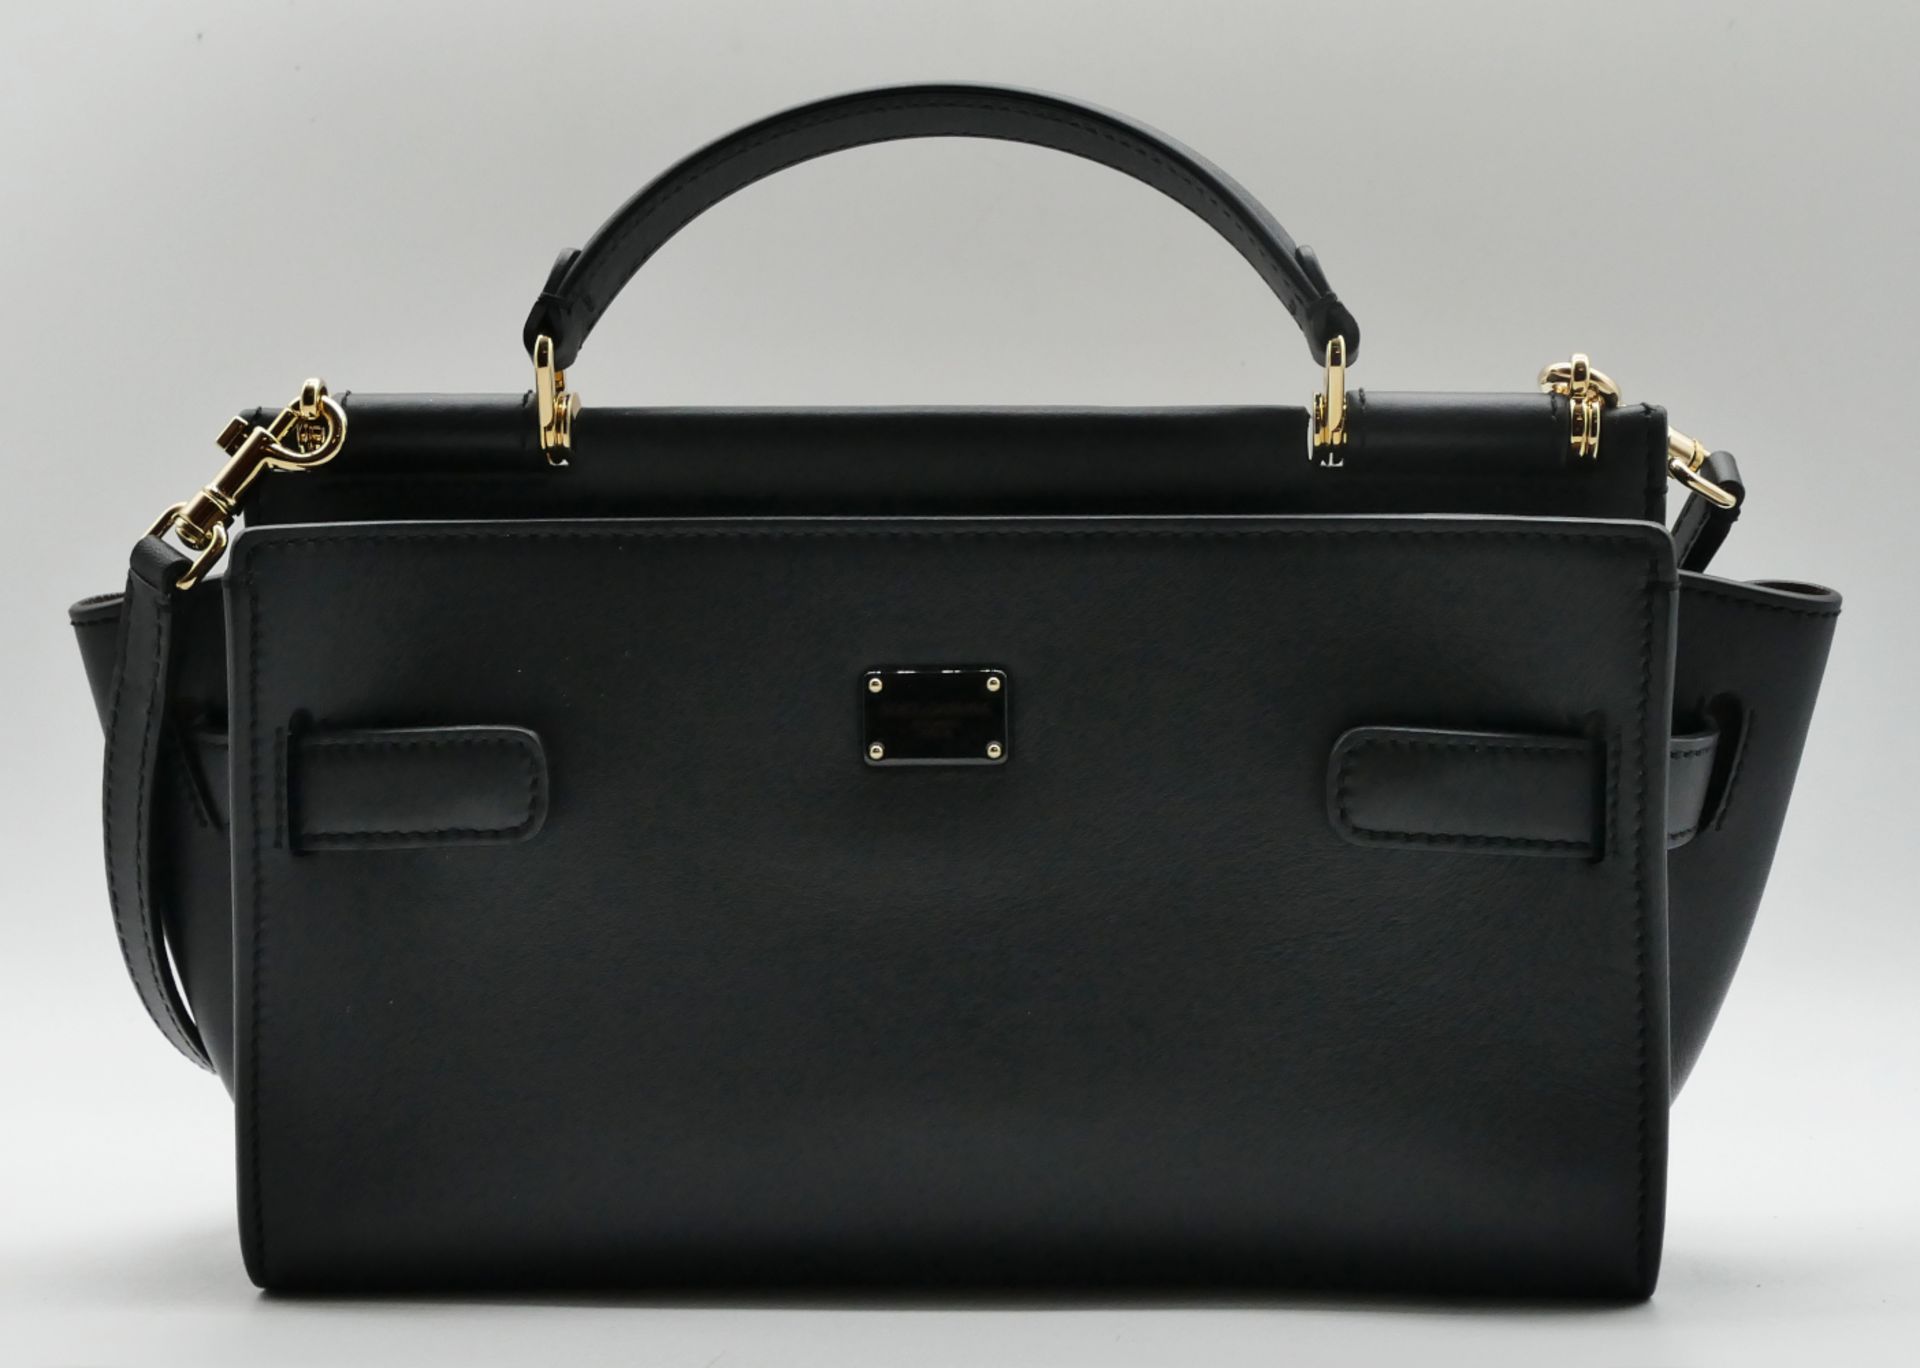 1 Damenhandtasche D&G, schwarzes Glattleder, mit 2 zusätzlichen (abnehmbaren) Schulterriemen, innen